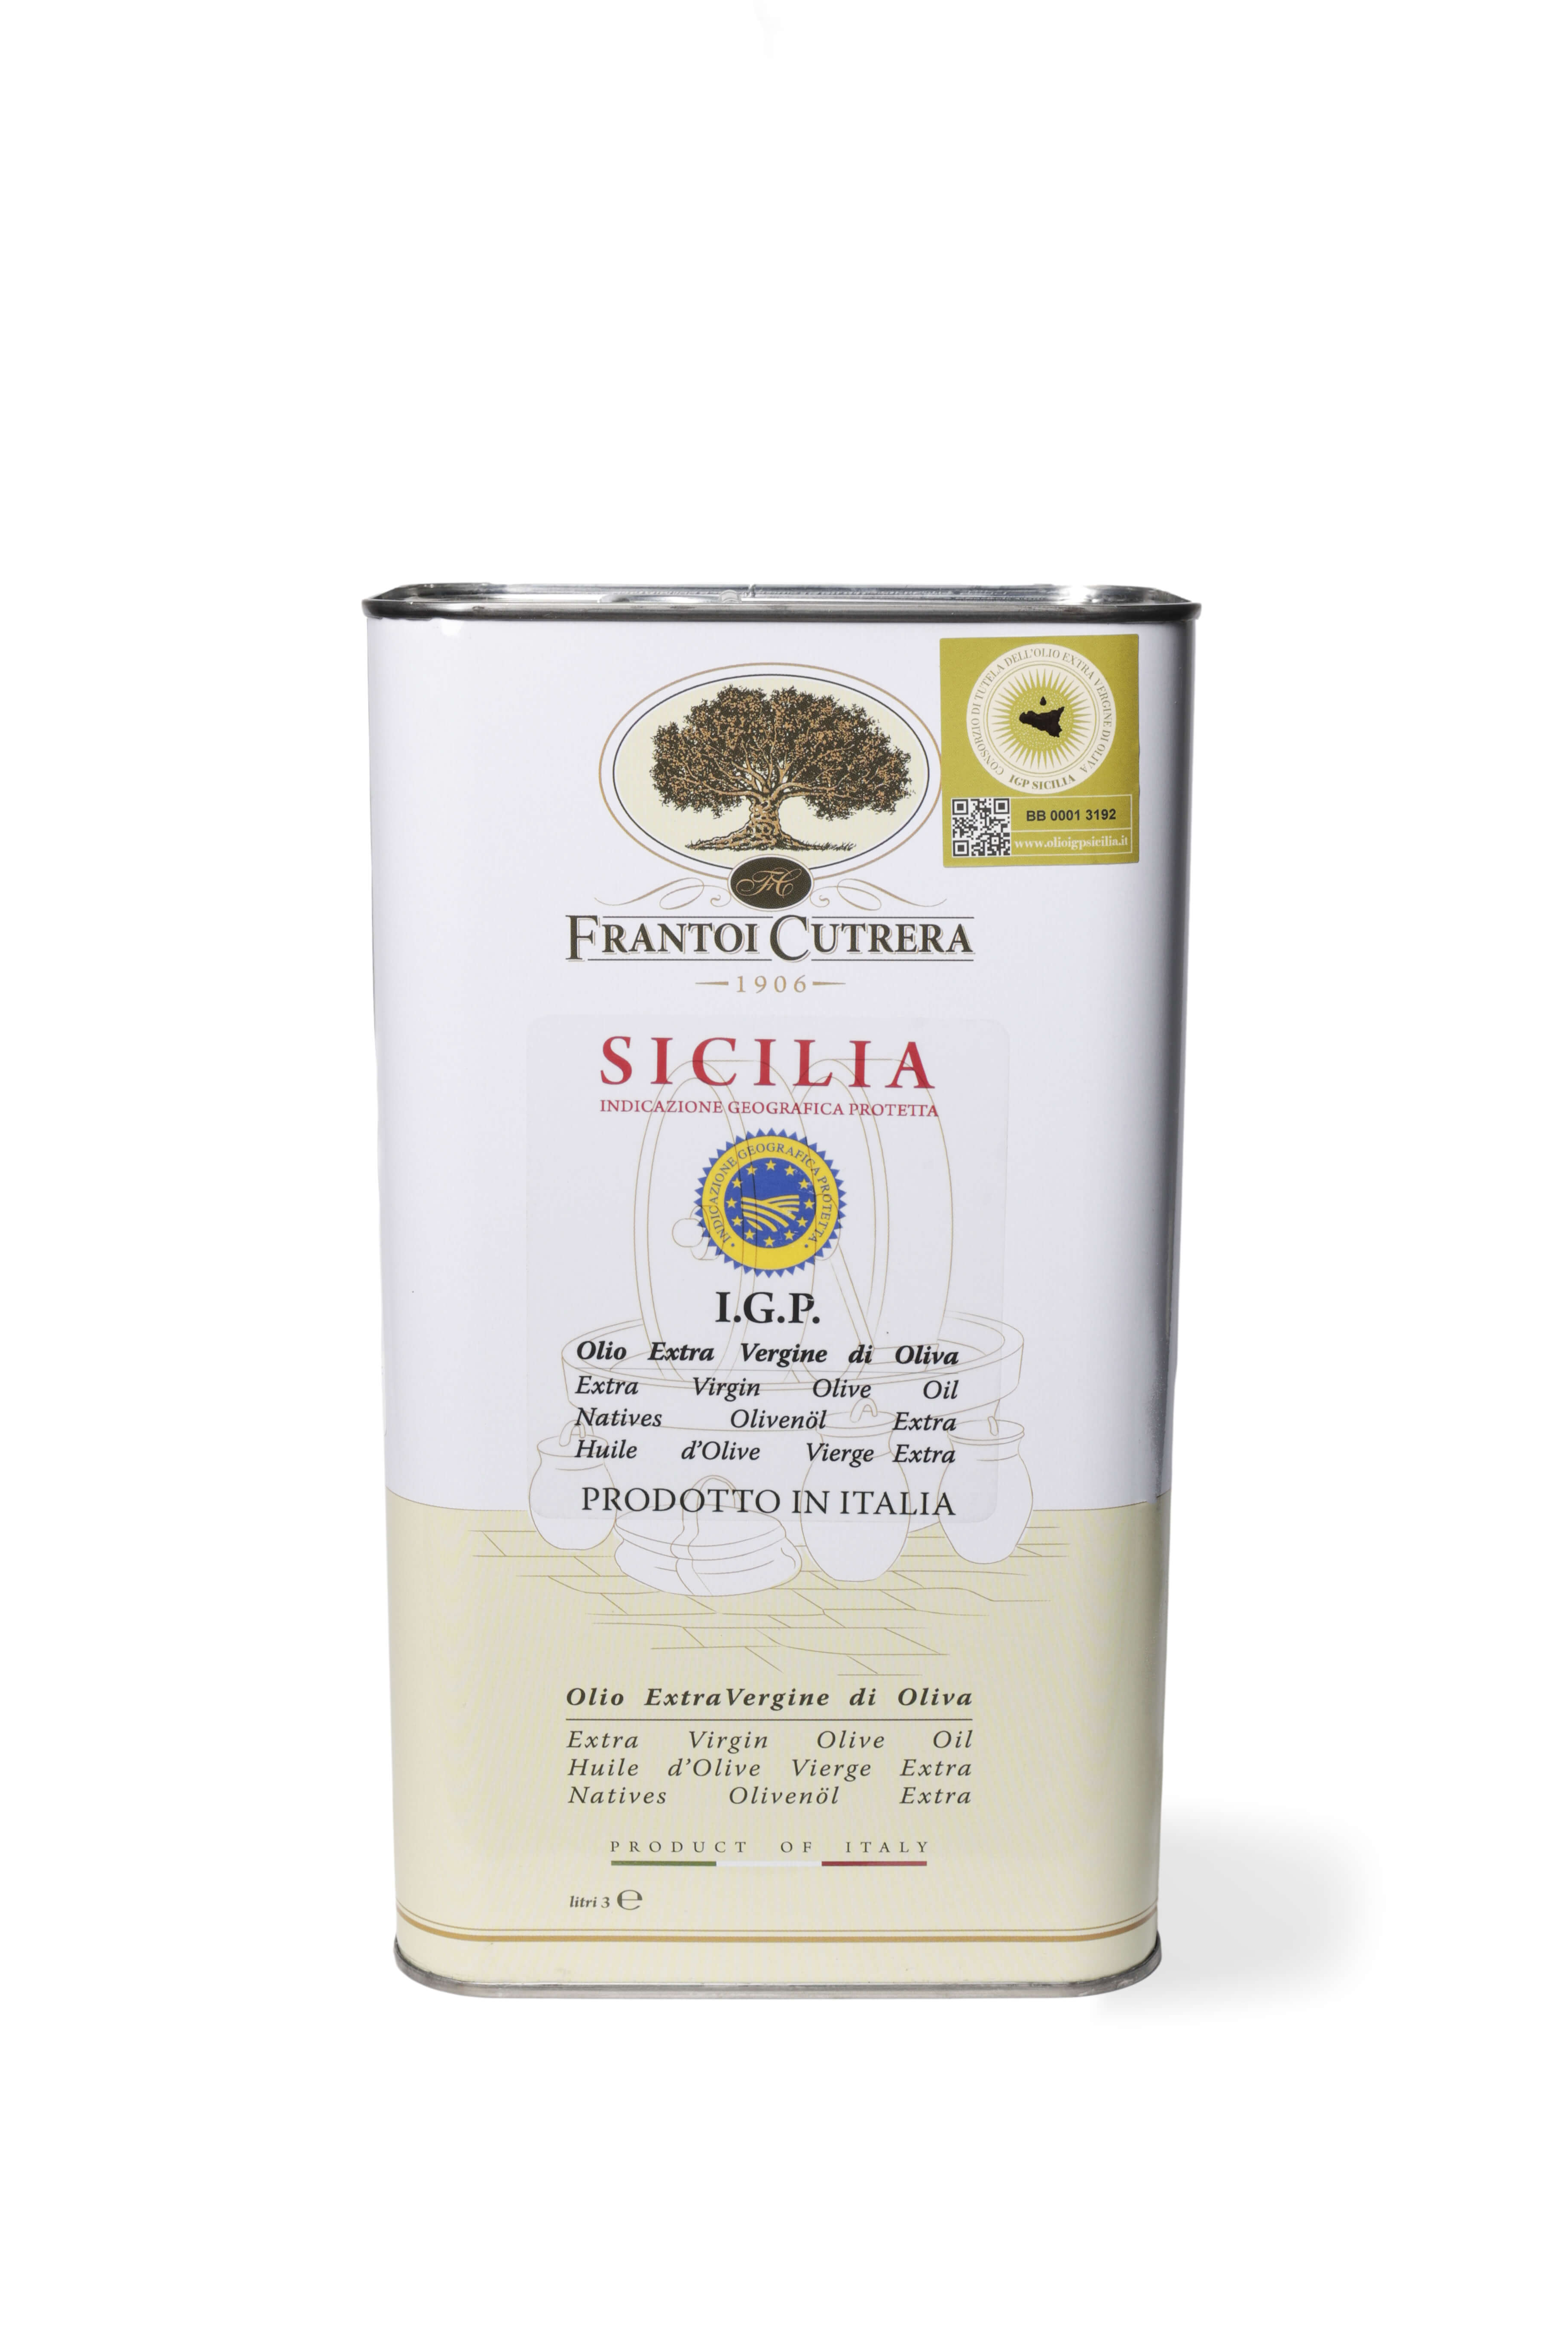 Cutrera PGI Sicily - Sicilian Extra Virgin Olive Oil - Tin